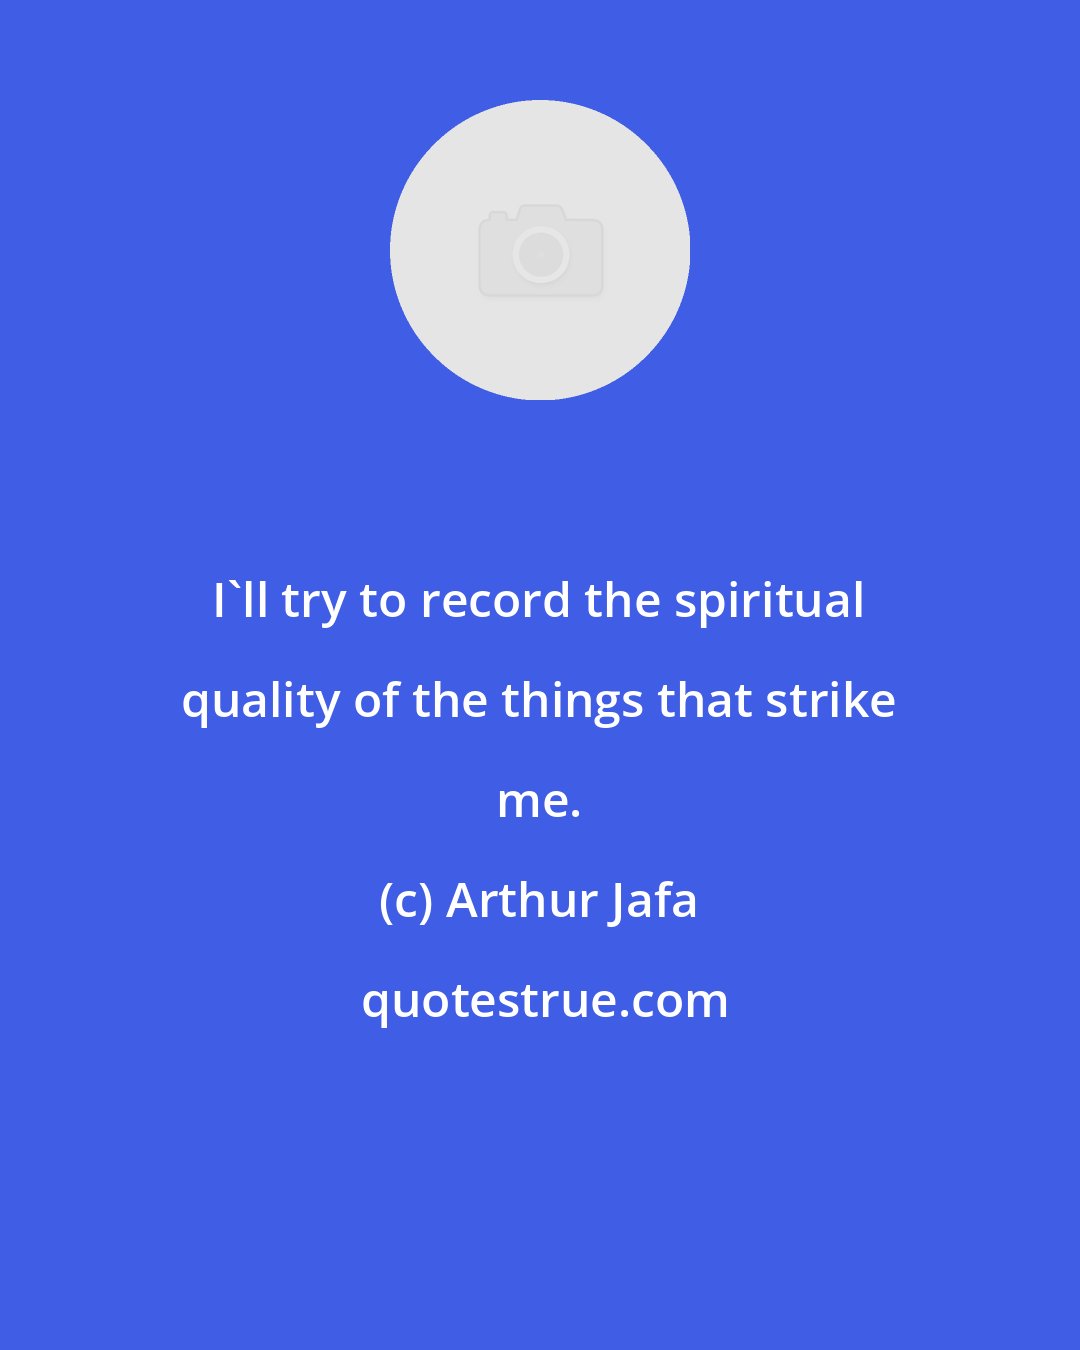 Arthur Jafa: I'll try to record the spiritual quality of the things that strike me.